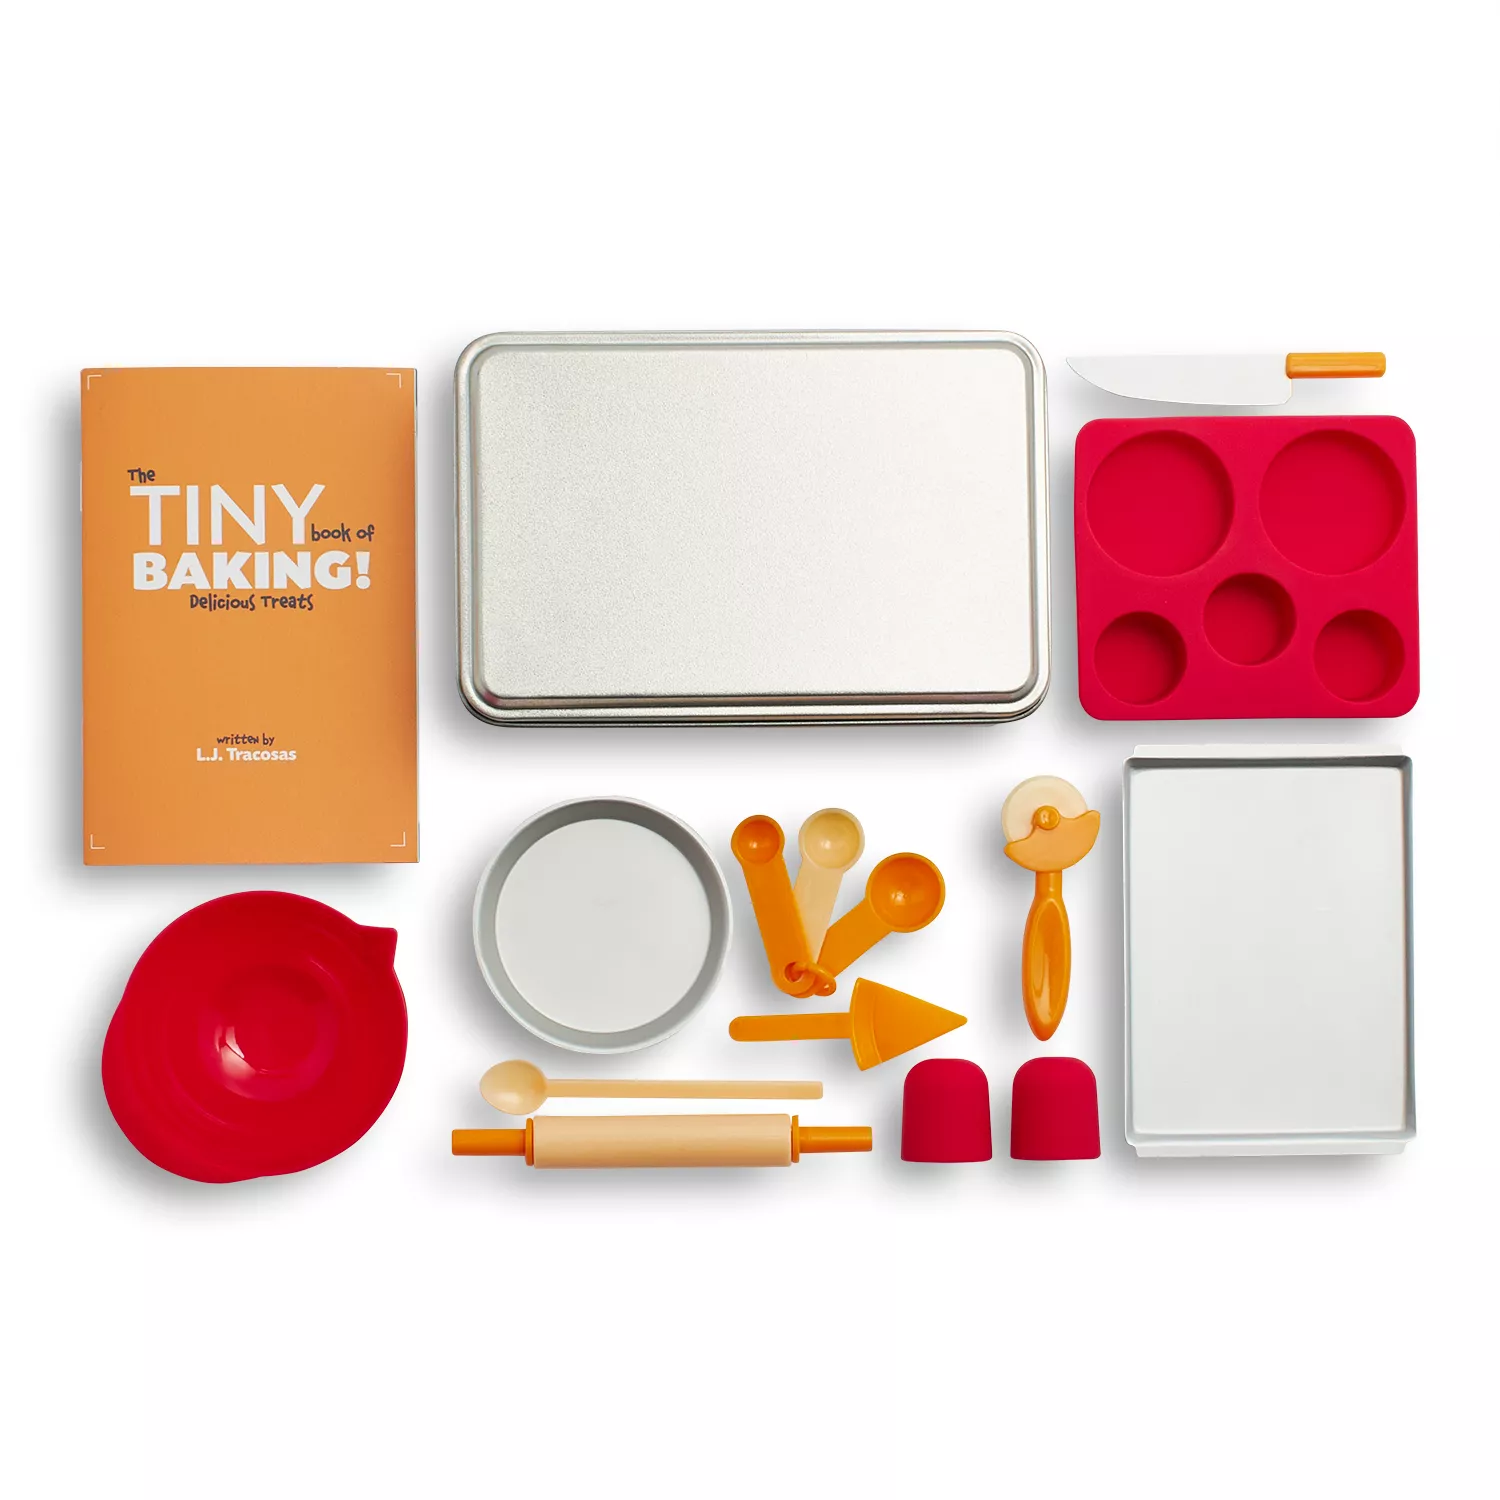  SmartLab Toys Tiny Baking with 20 Delicious Tiny Recipes. Big  Science. Tiny Tools. : Toys & Games